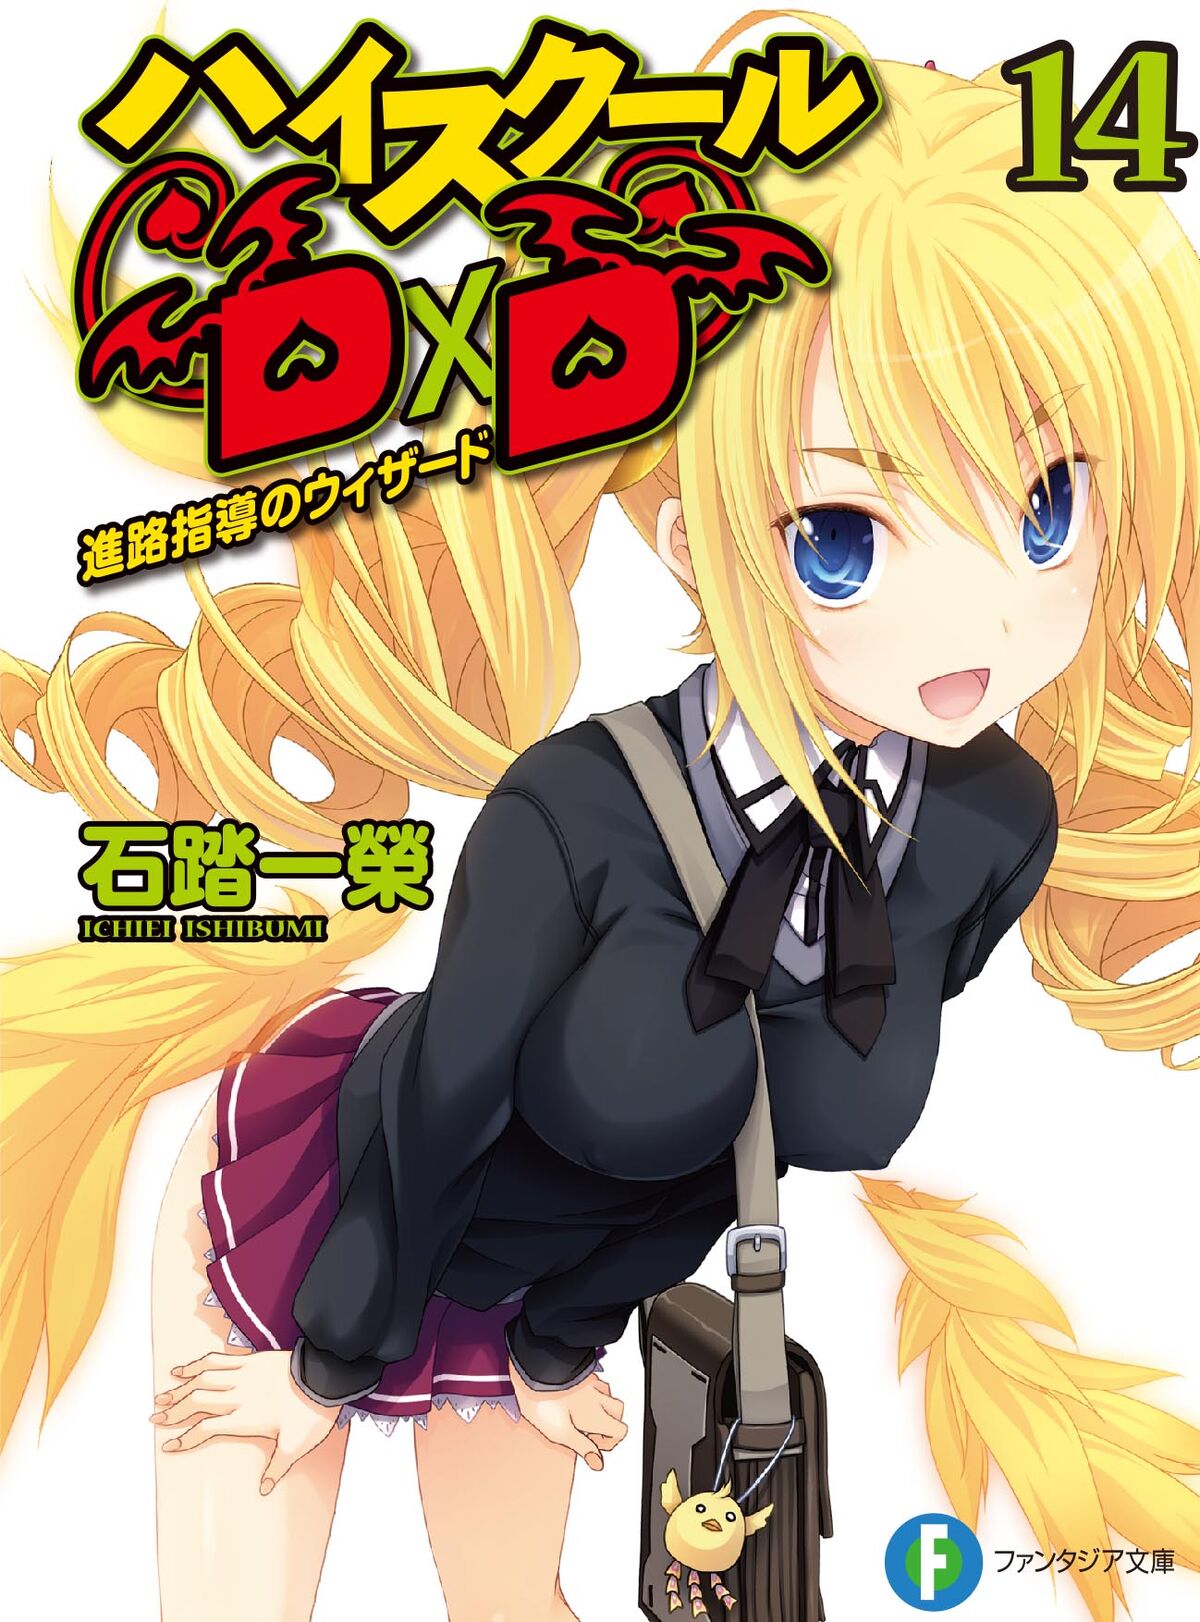 True Light Novel Volume 1, High School DxD Wiki